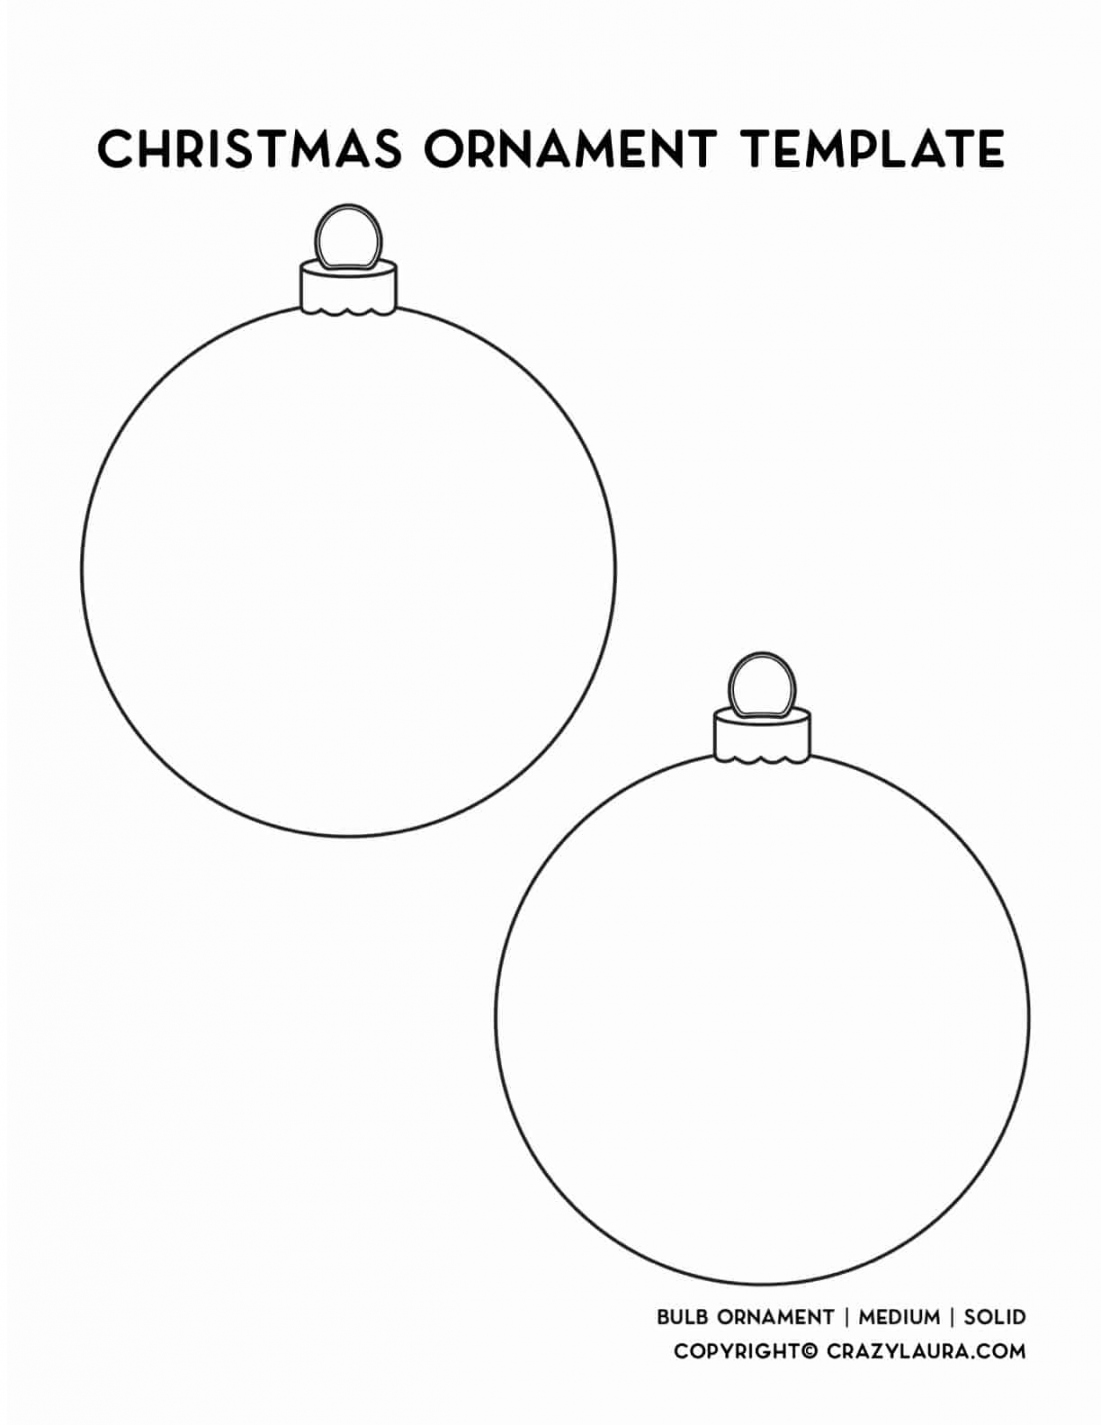 Free Christmas Ornament Template Printables & Outlines - Crazy Laura - FREE Printables - Christmas Ornament Cutouts